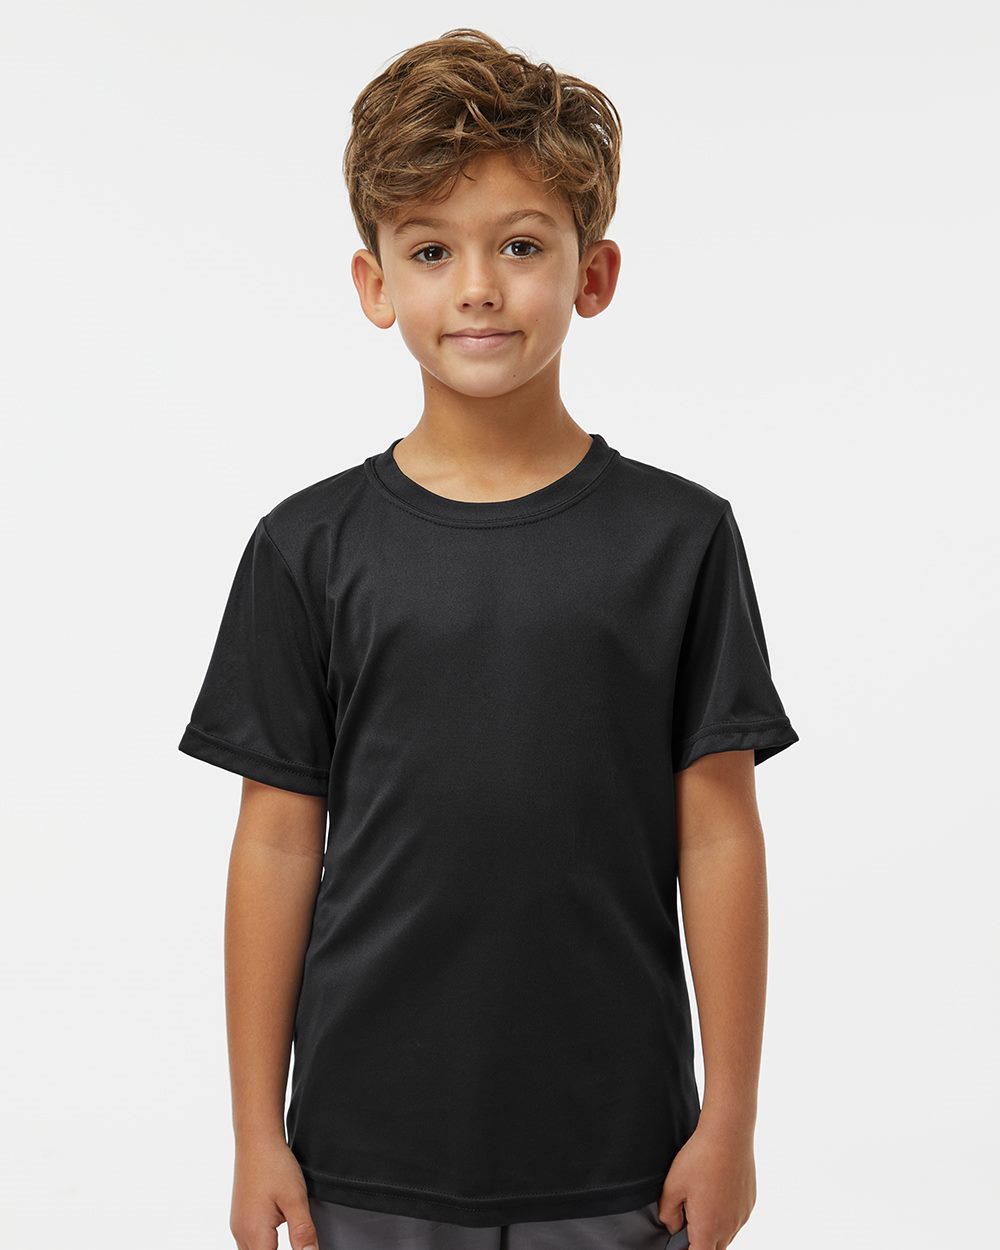 Augusta Sportswear 791 - Youth Nexgen Wicking T-Shirt